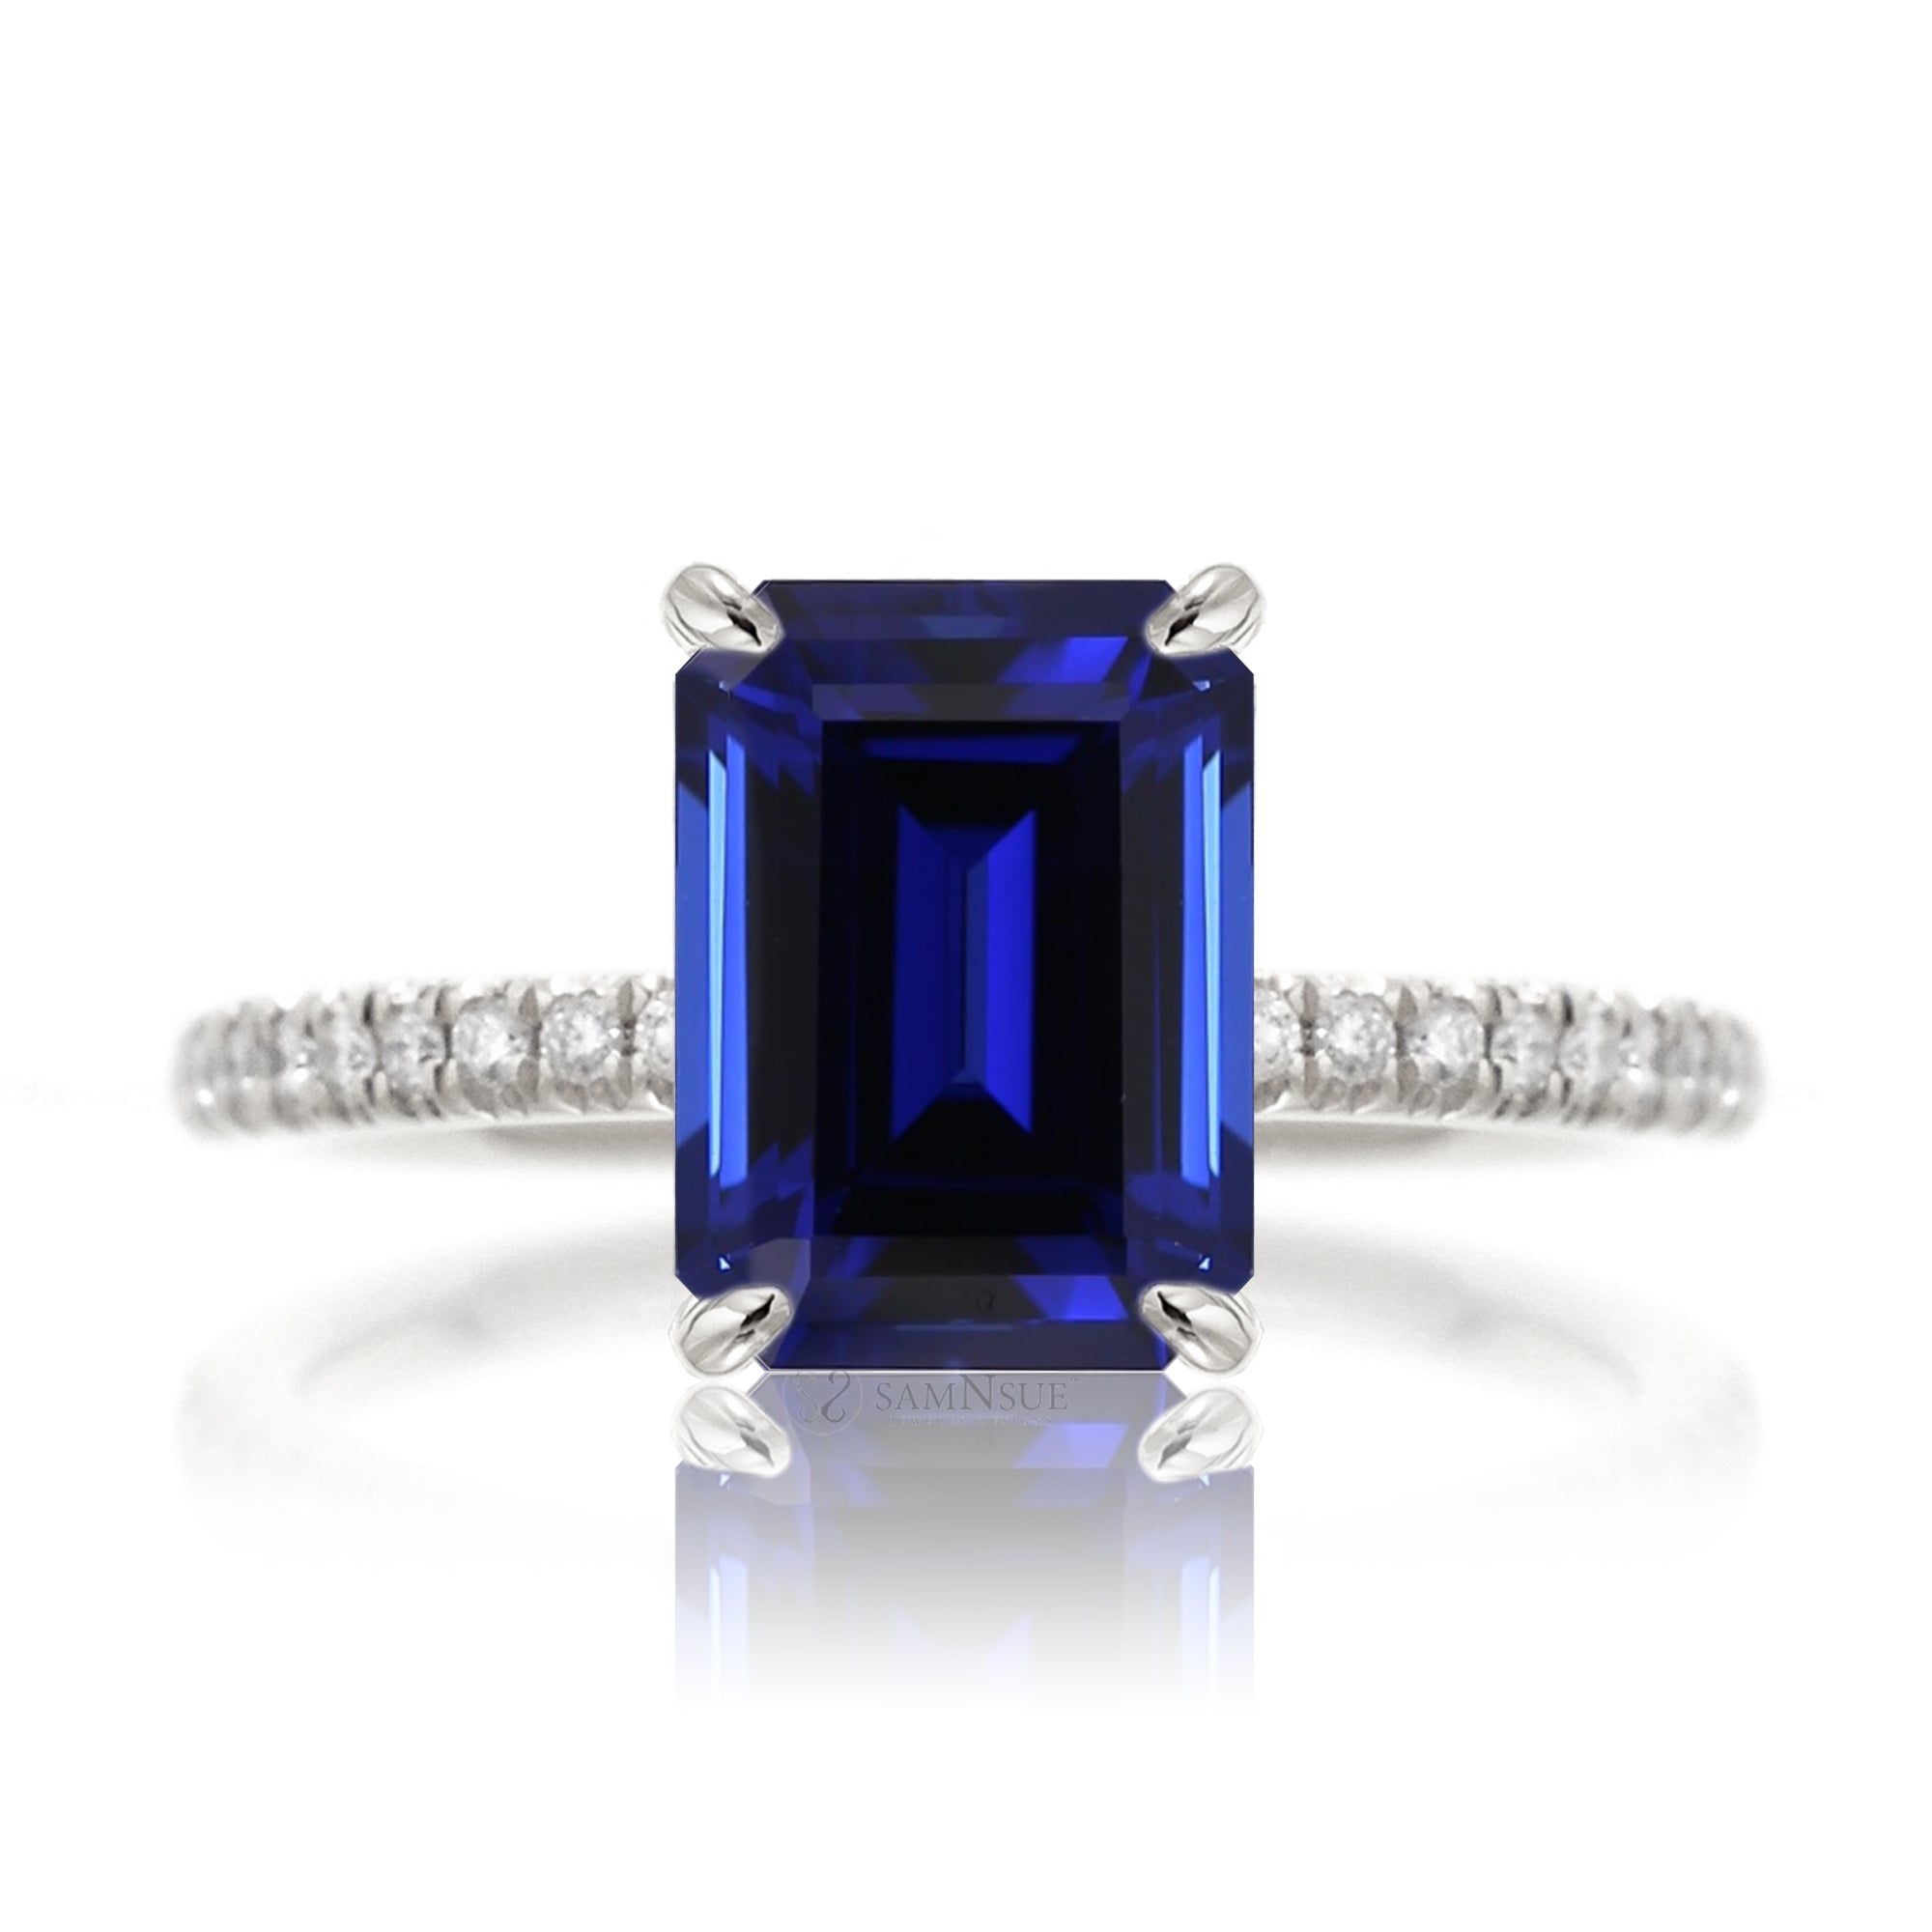 Emerald cut blue sapphire diamond engagement ring white gold - the Ava